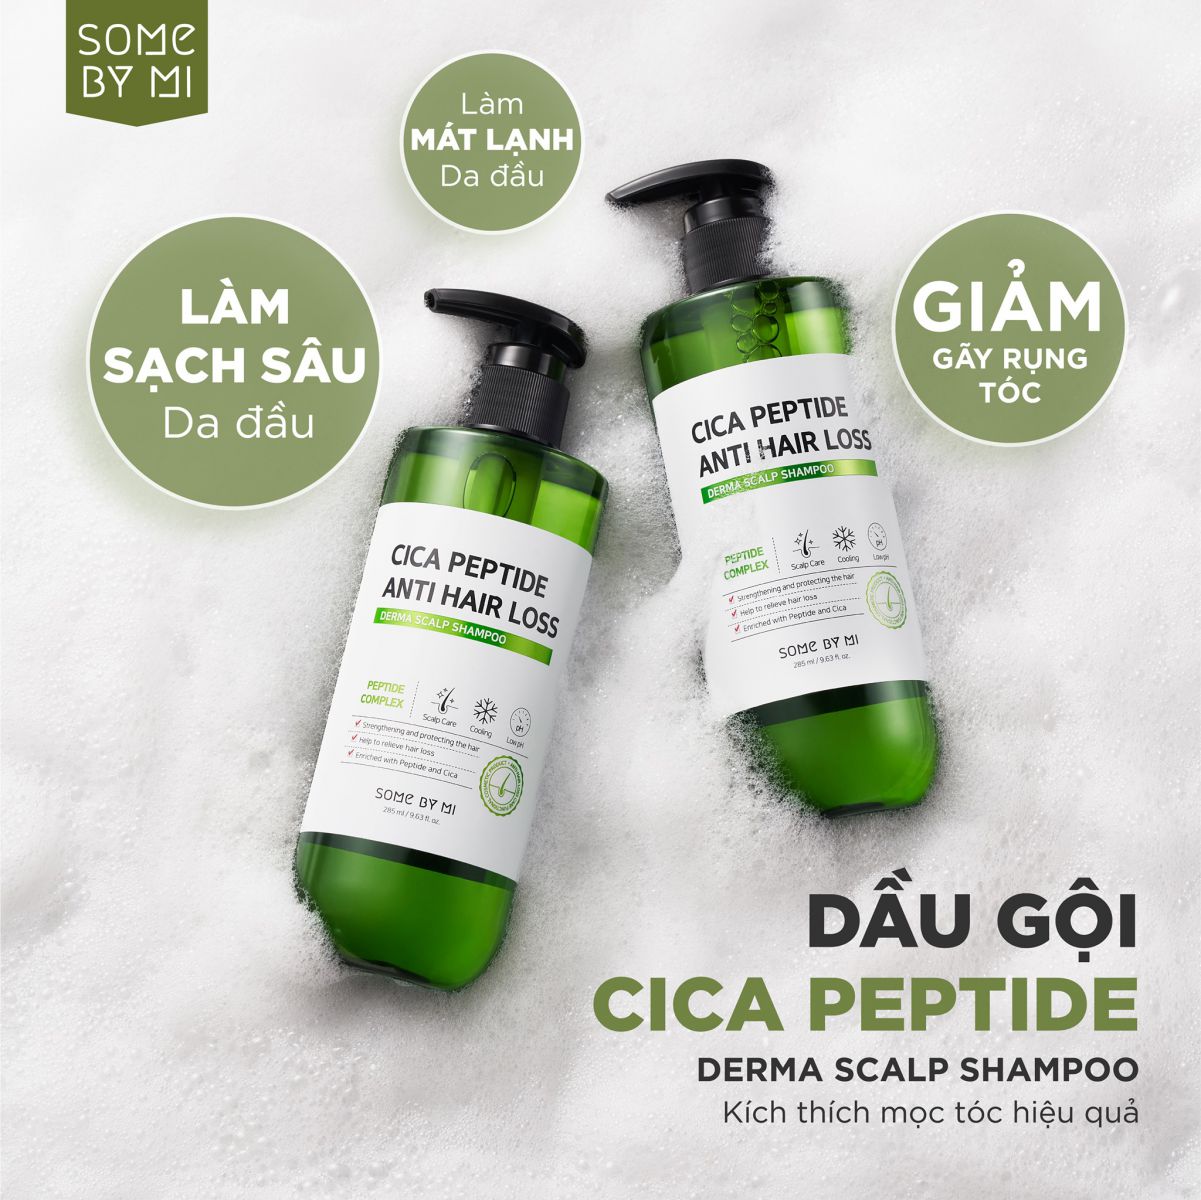 Dầu Gội Some By Mi Cica Peptide Anti Hair Loss Derma Scalp Shampoo